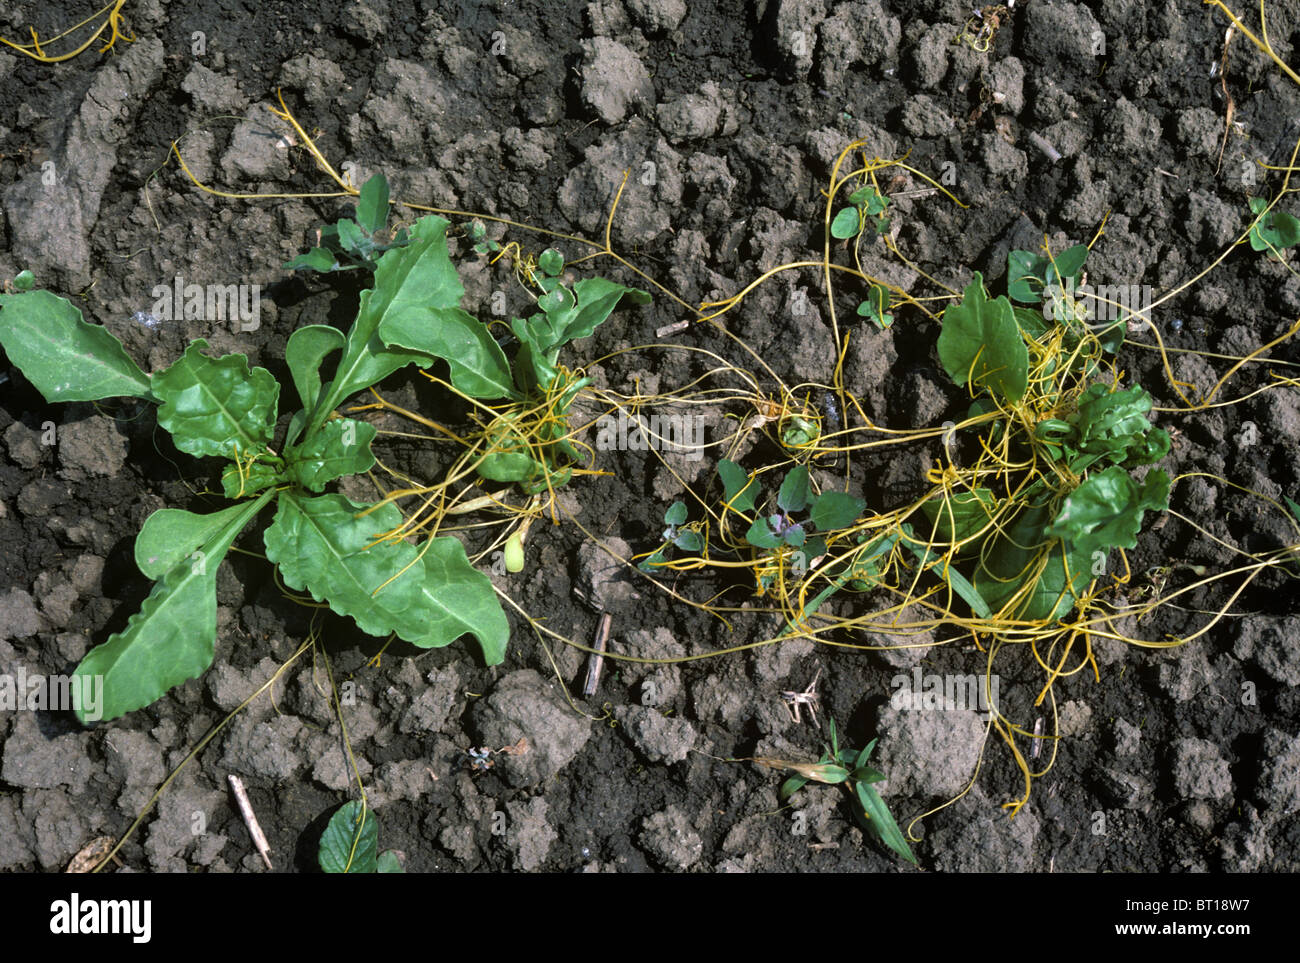 Dodder or strangleweed (Cuscuta epithymum) parasitic weed on seedling sugar beet, Greece Stock Photo